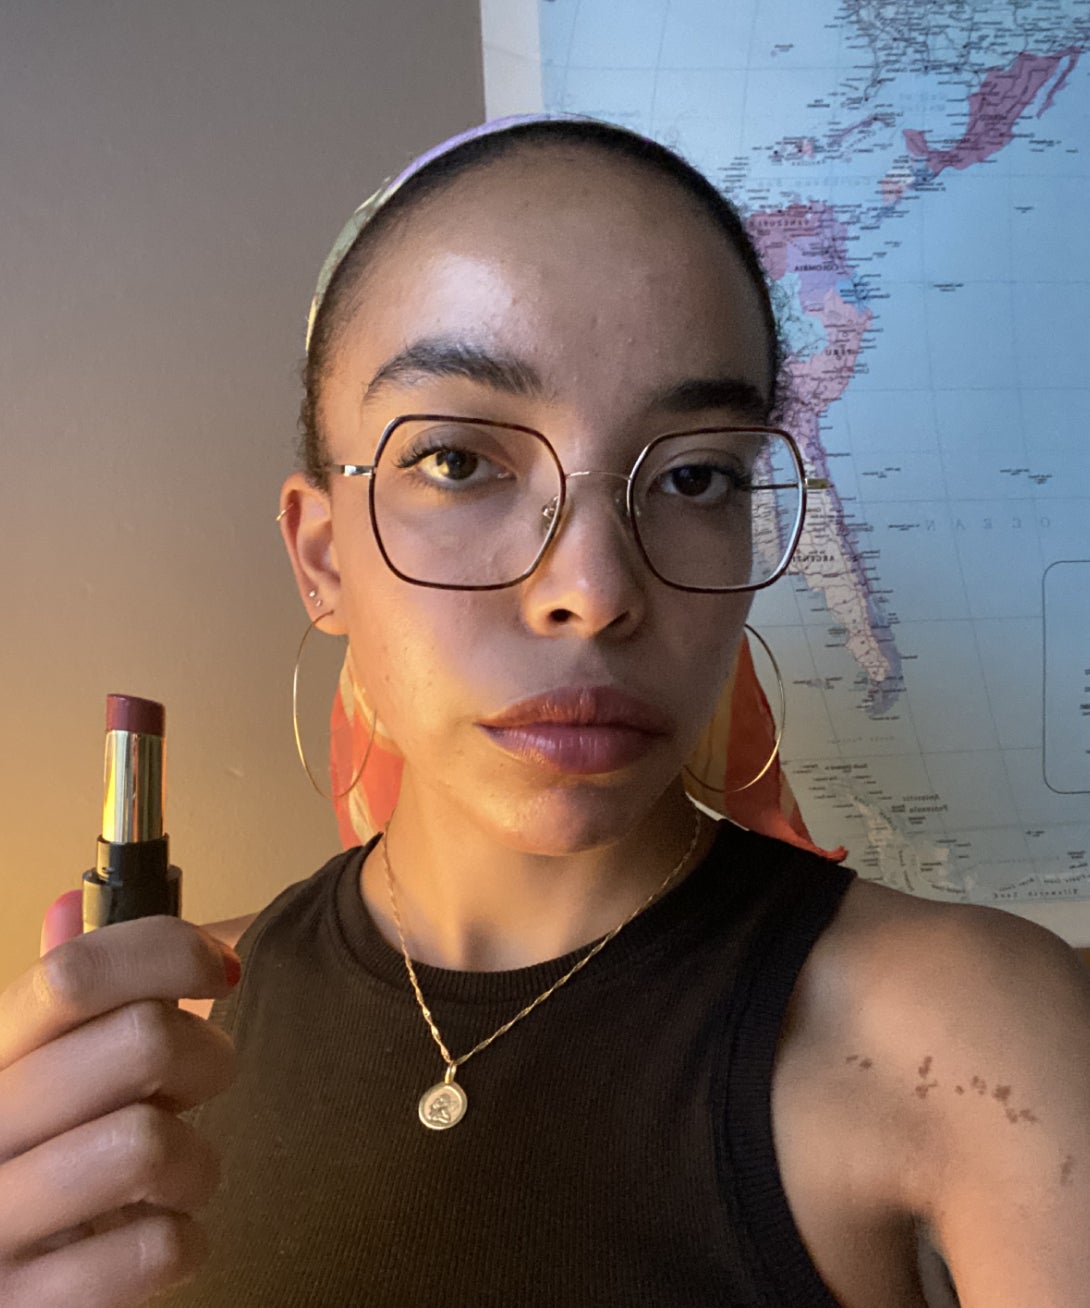 Revlon Super Lustrous Lip Gloss: A Fenty Beauty Gloss Bomb Alternative